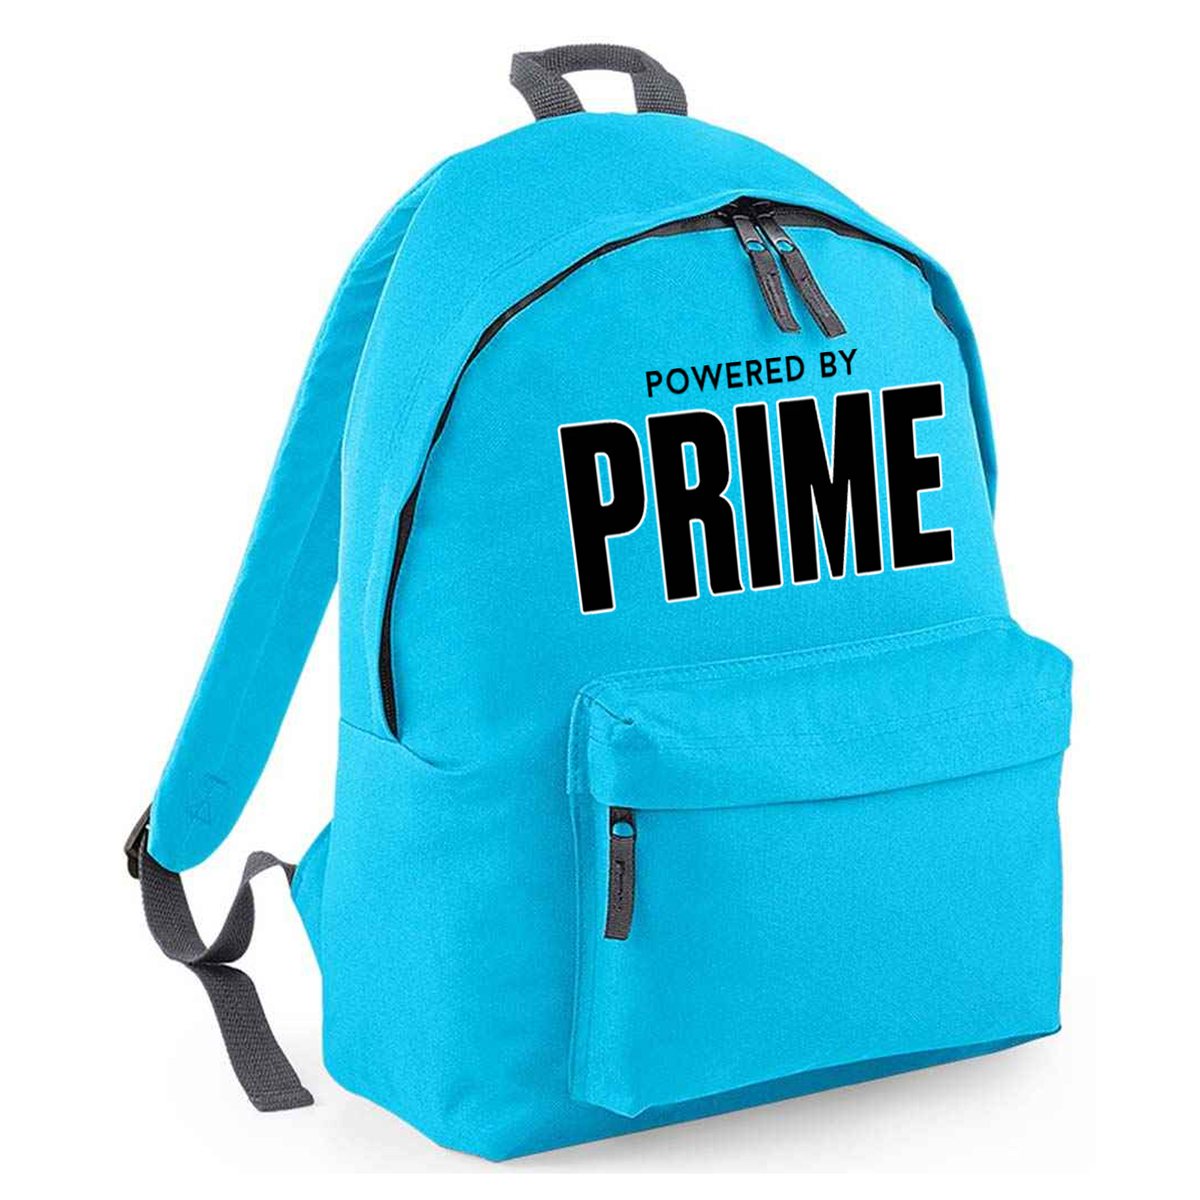 Powered By Prime Backpack - school bag